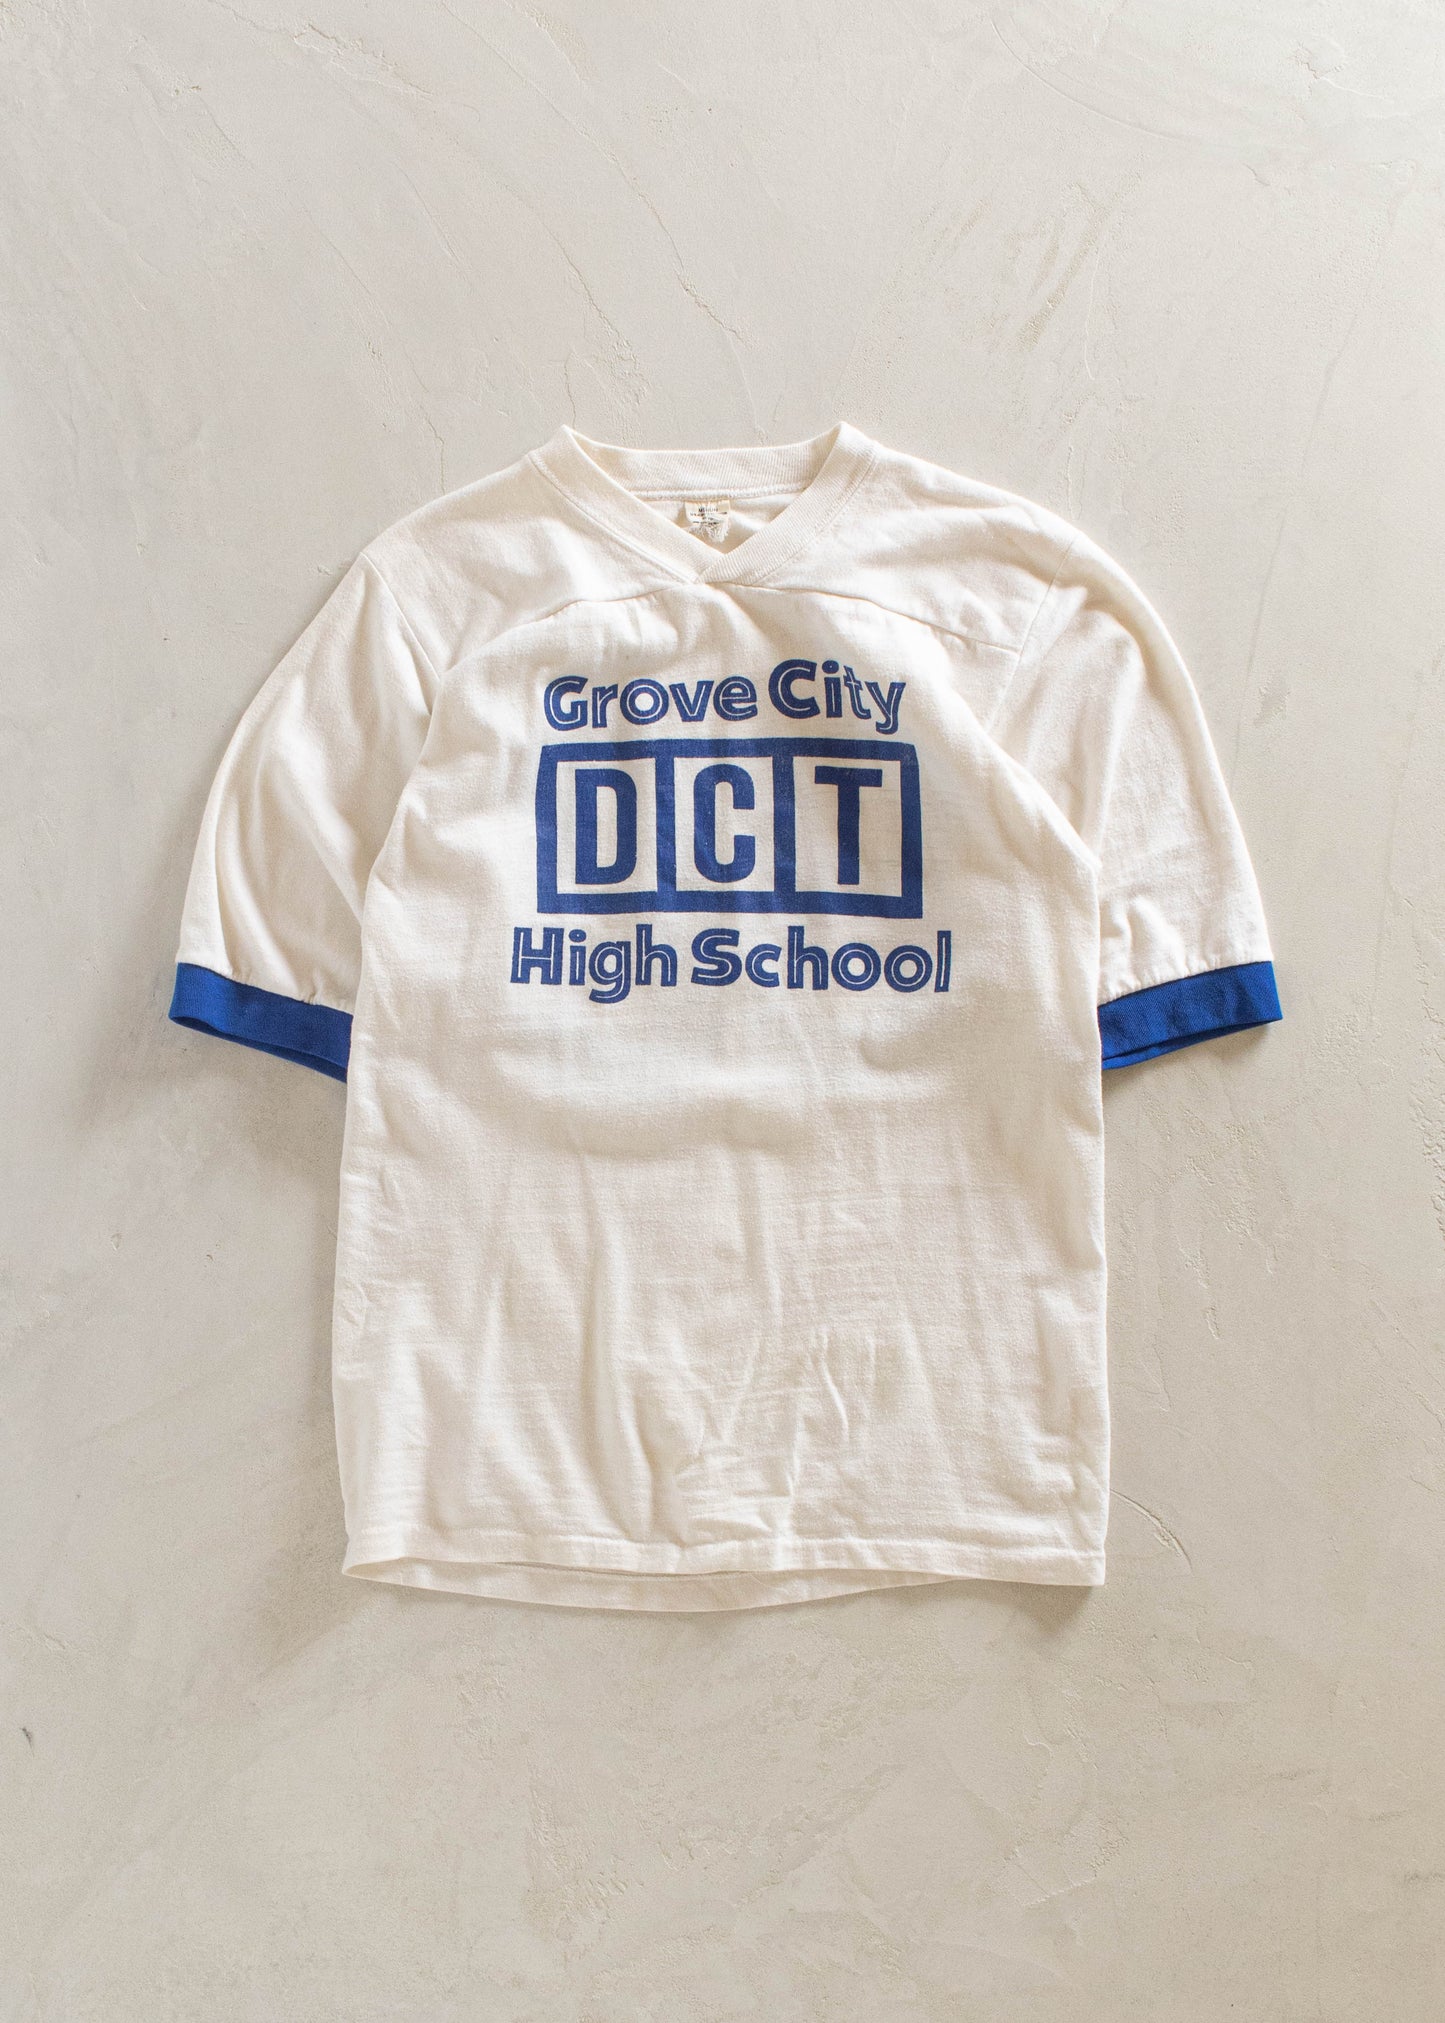 1980s Grove City High School Sport Jersey Size S/M